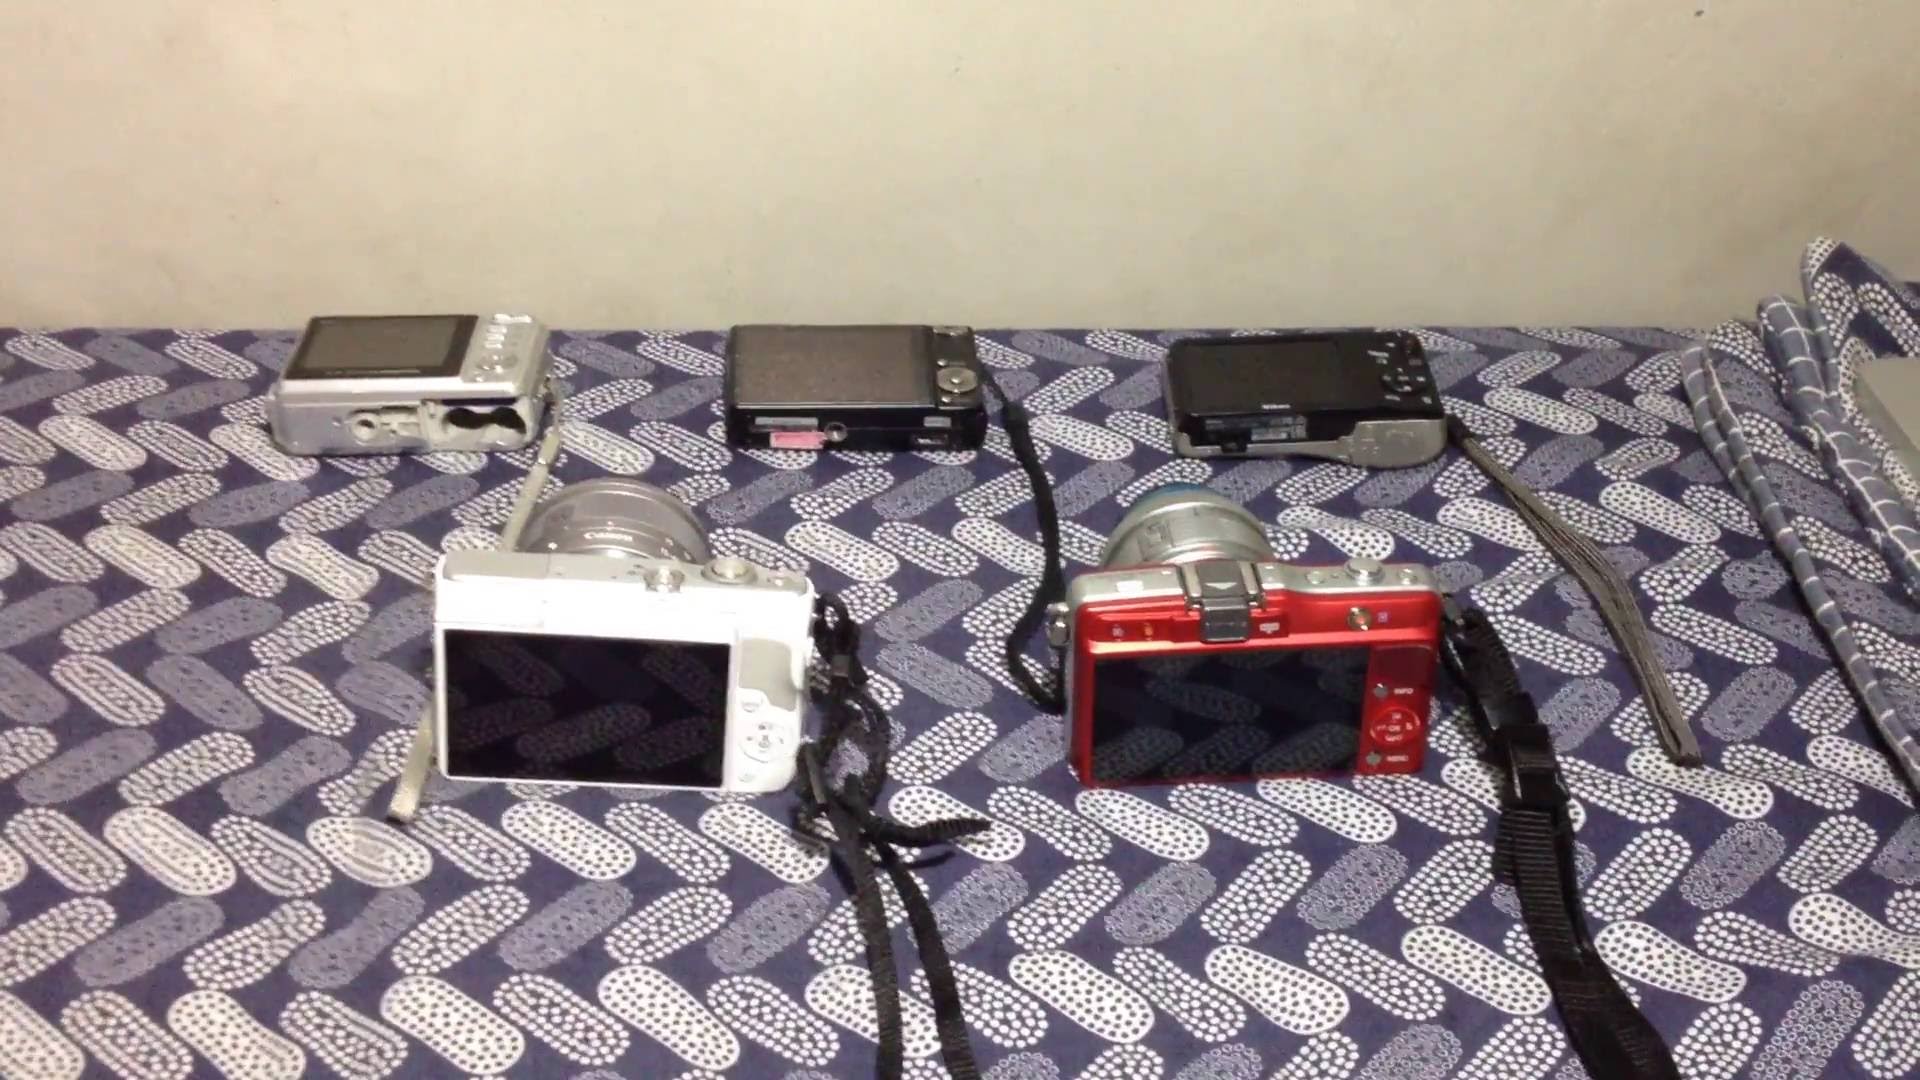 My recording equipments